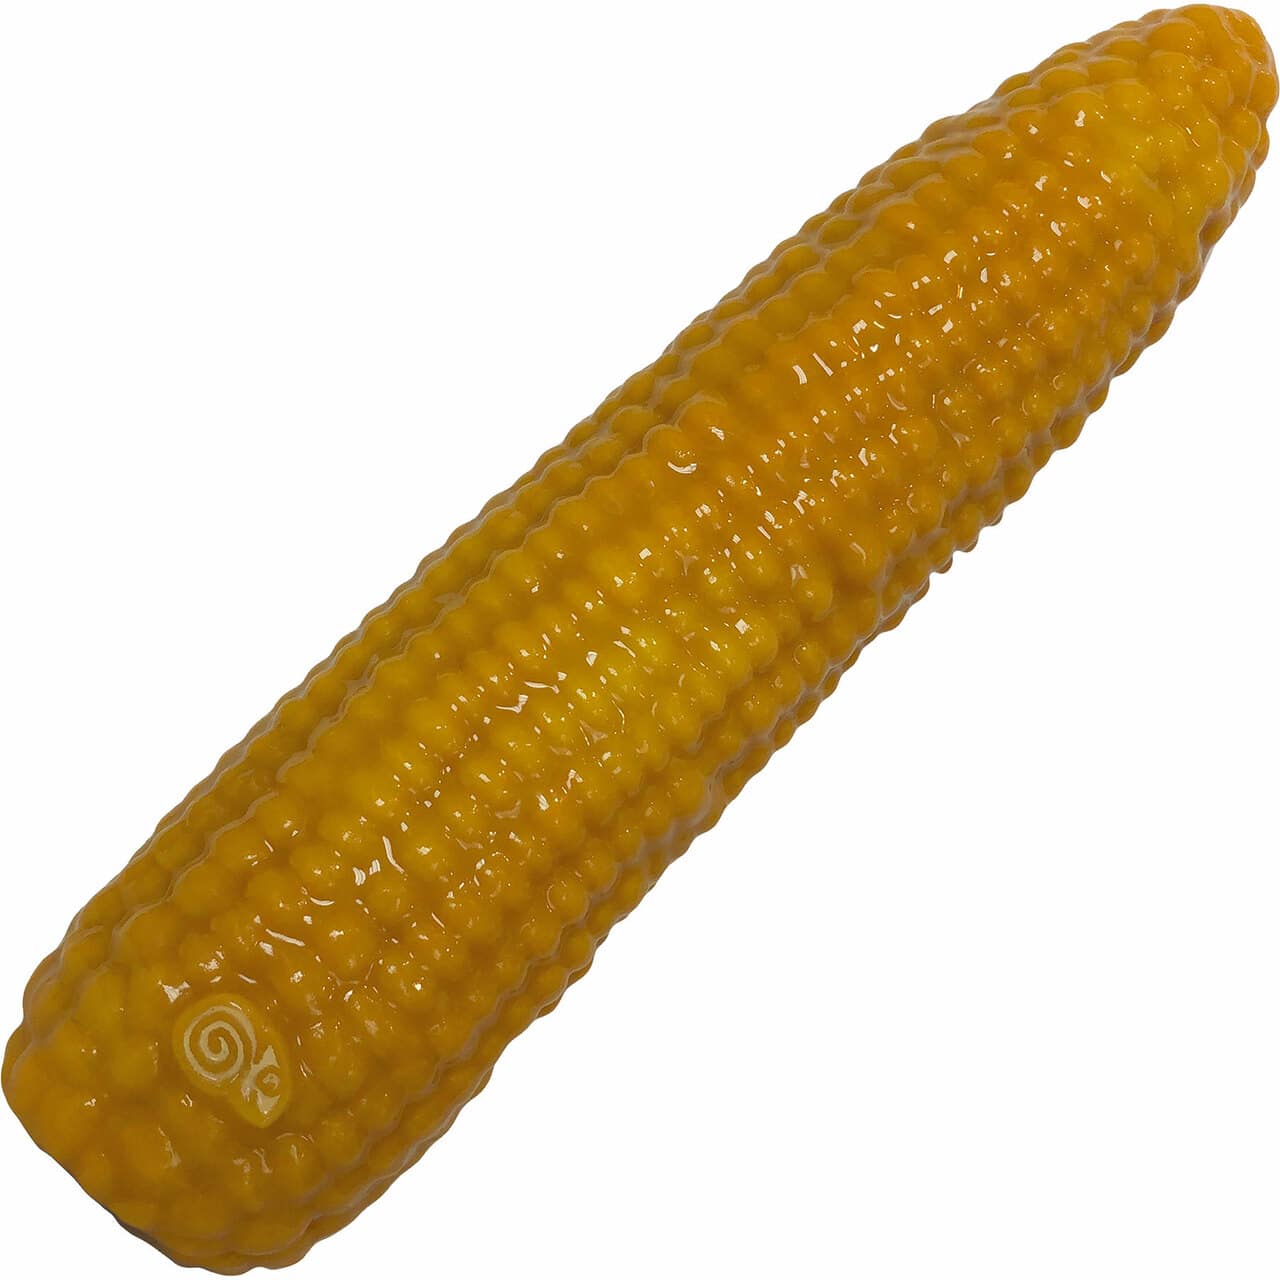 SelfDelve Corn On The Cob Large Silicone Dildo 